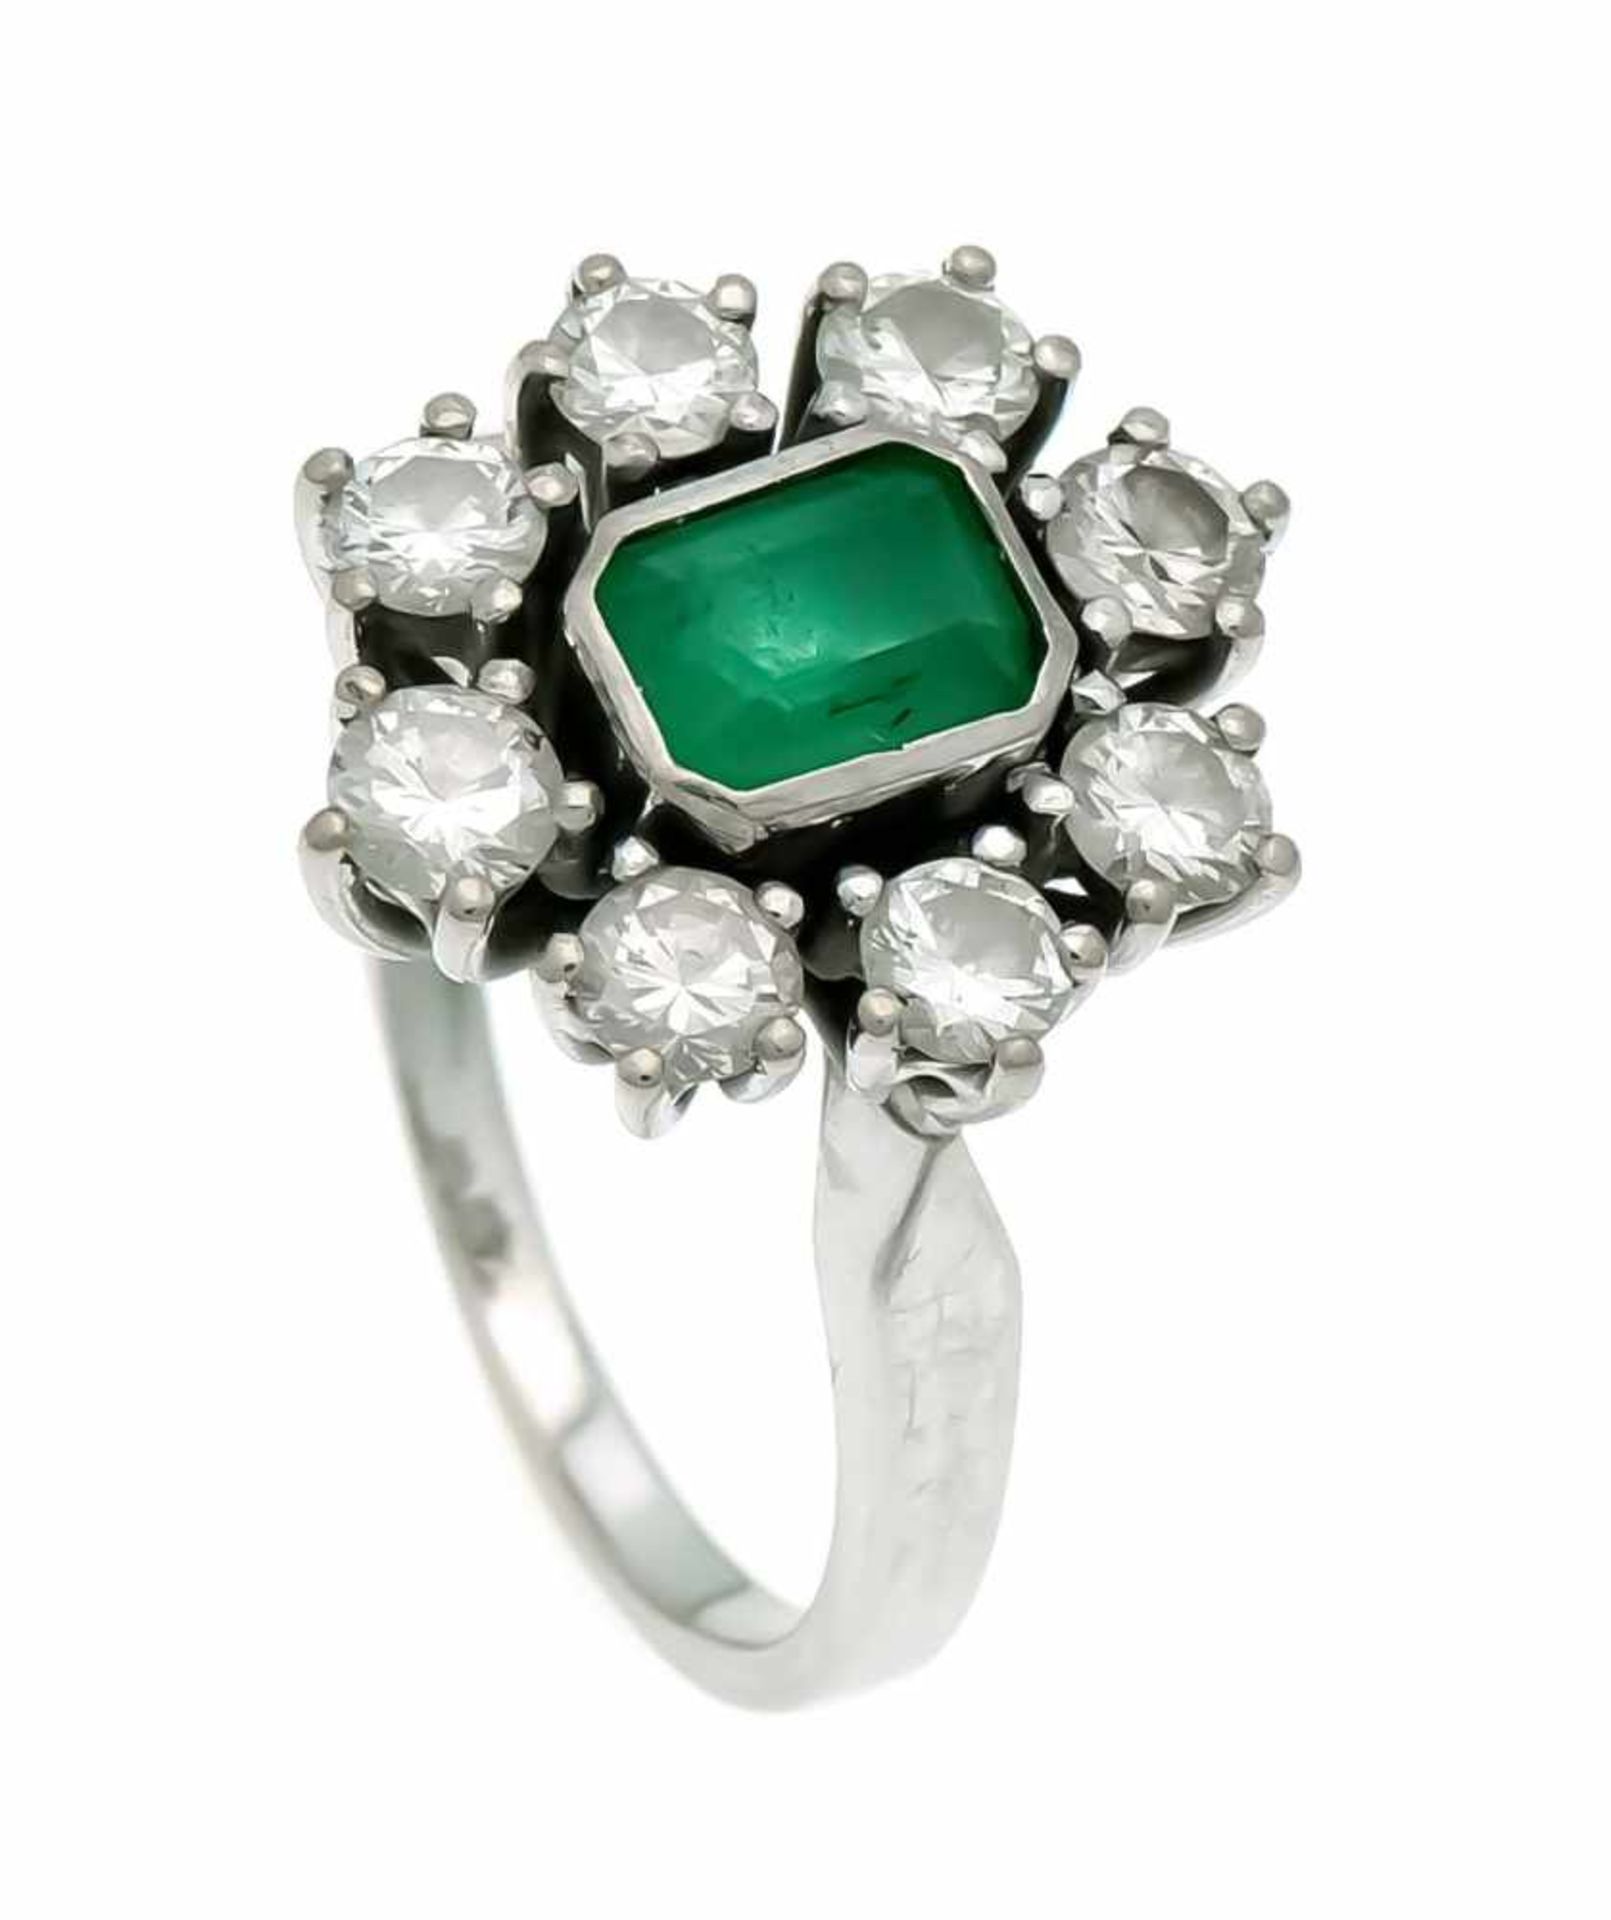 Emerald-Brilliant-Ring WG 590/000 with an emerald cut fac. Emerald 6.2 x 4.8 mm in good